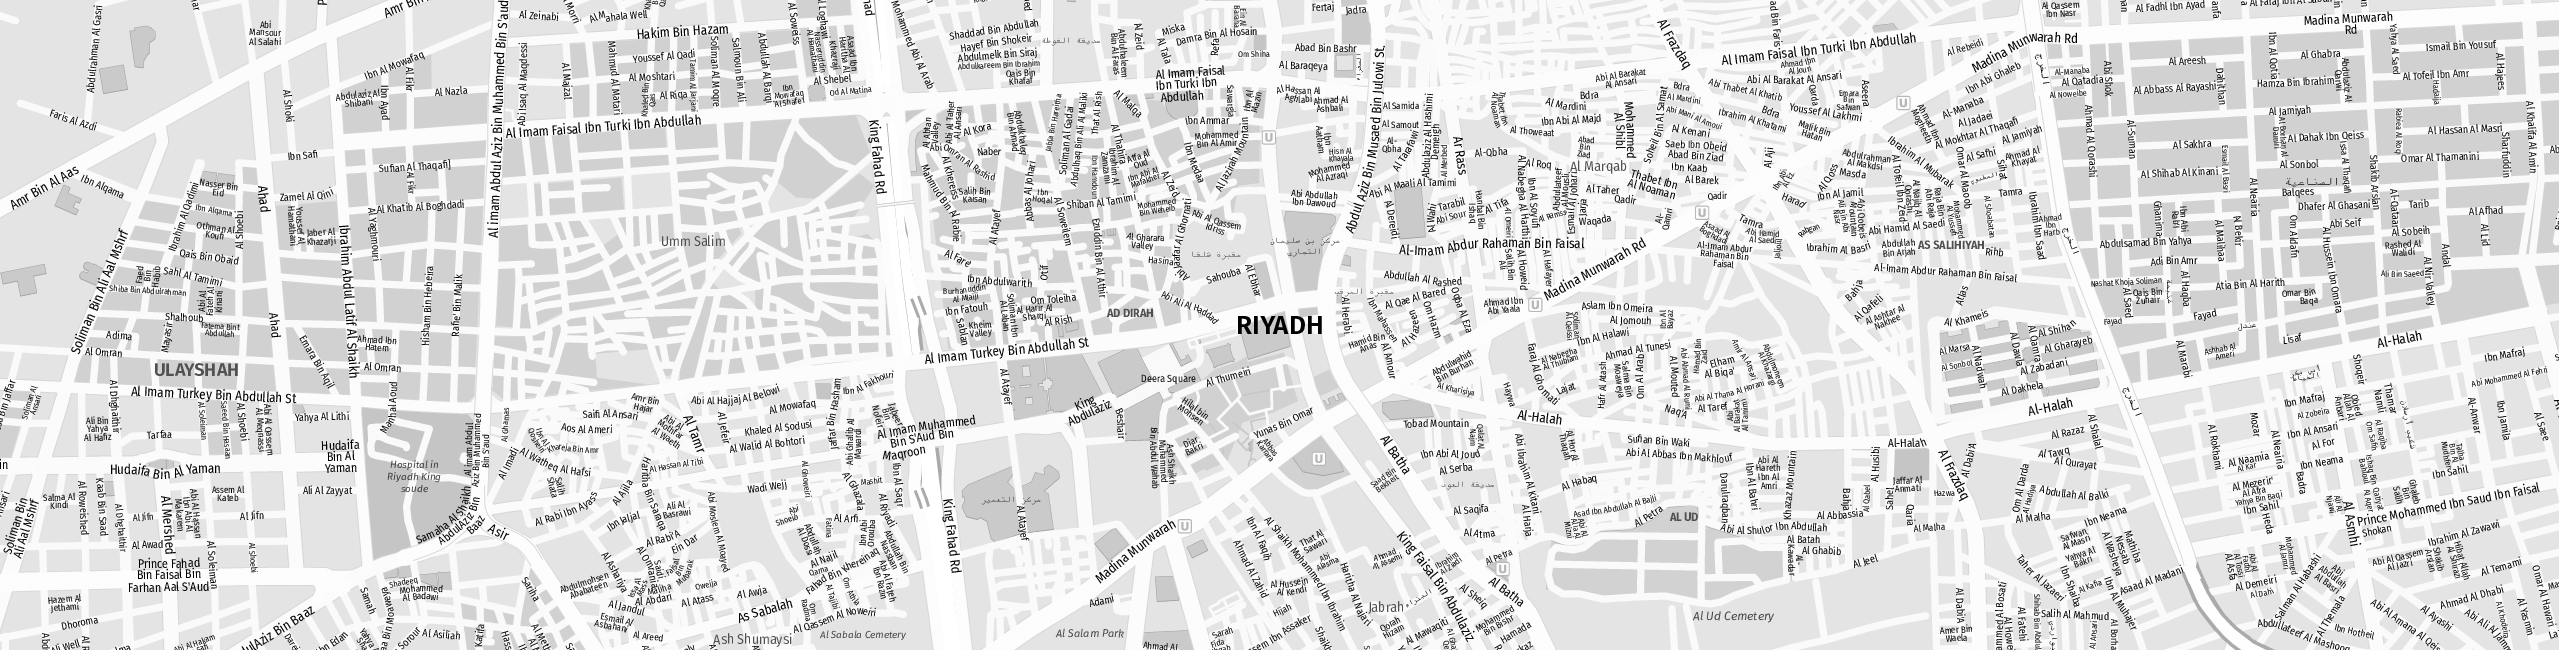 Stadtplan Riyadh zum Downloaden.